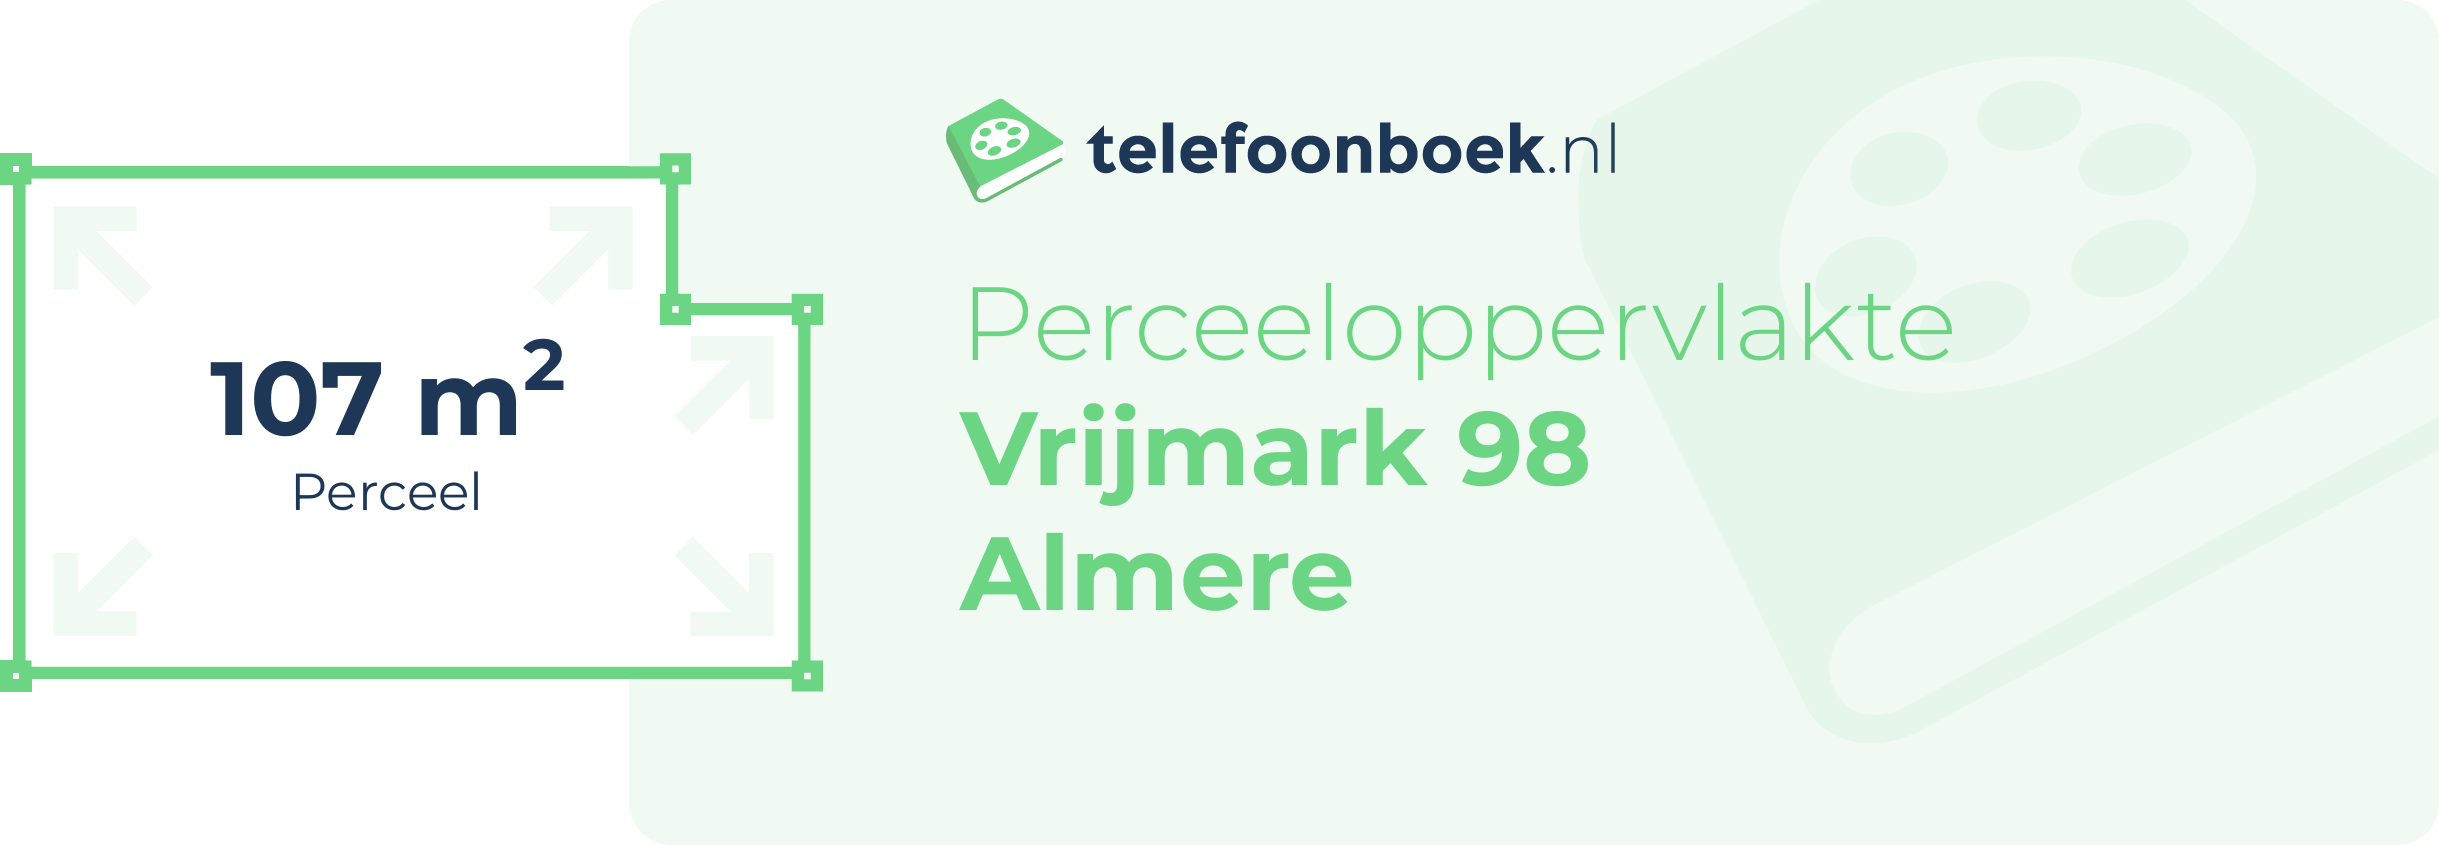 Perceeloppervlakte Vrijmark 98 Almere